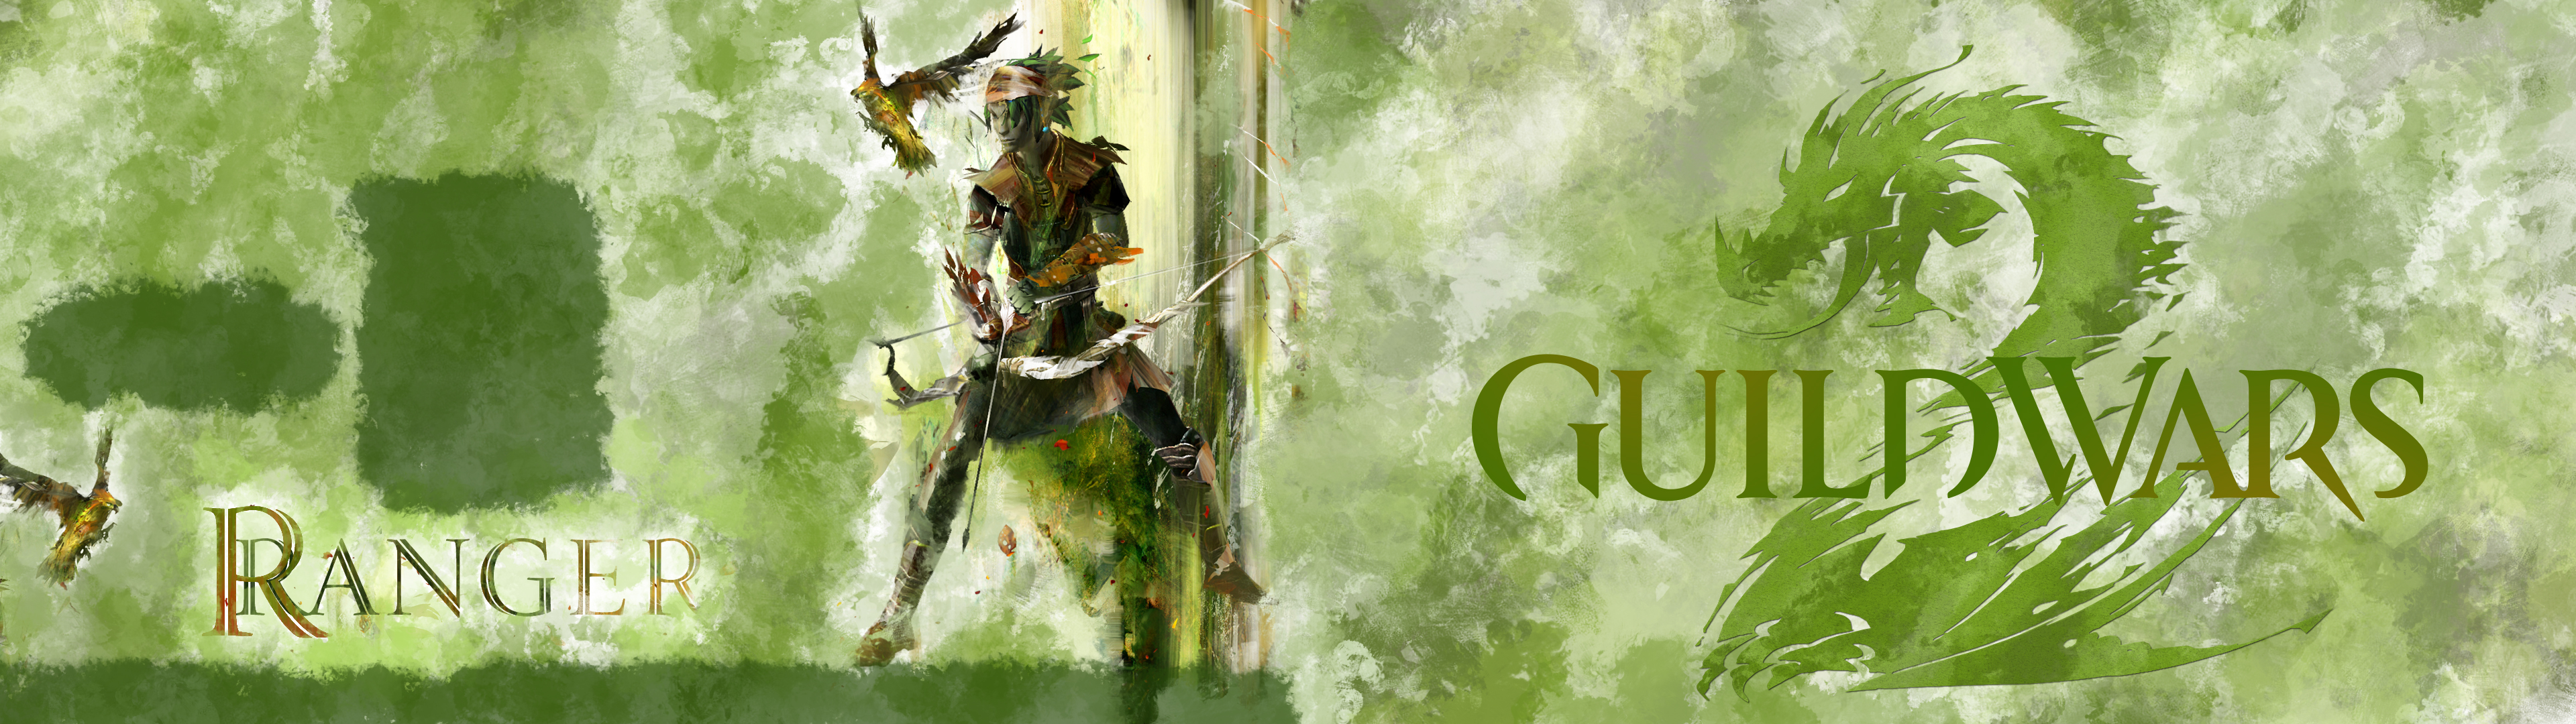 Guild Wars Dual Screen Ranger Wallpaper By Chipinators